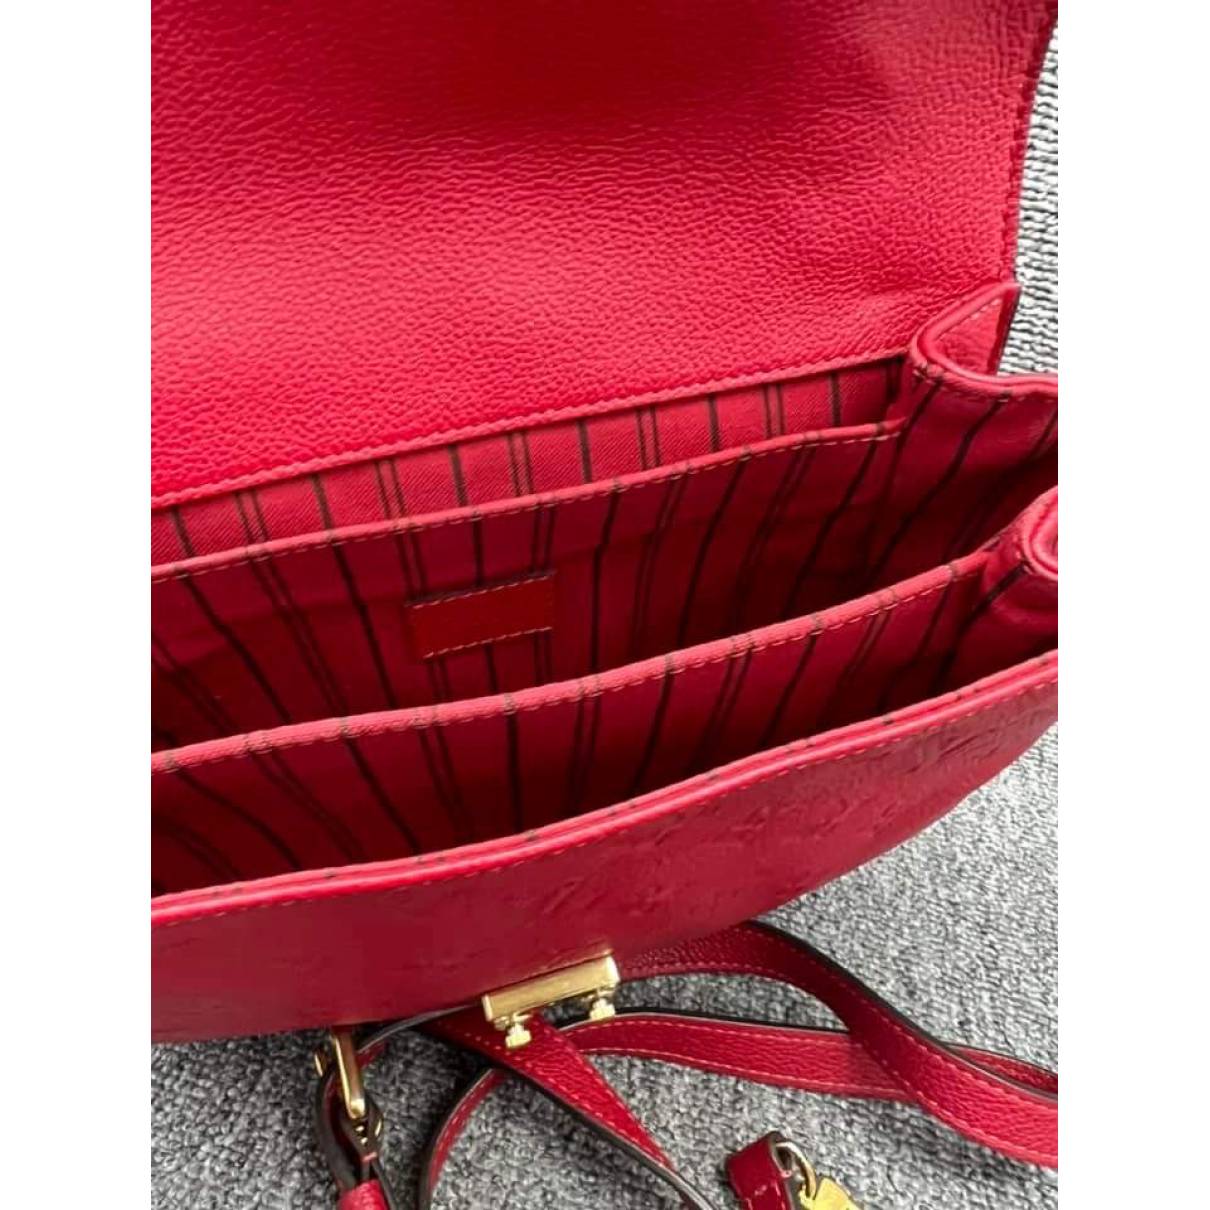 black lv bag with red inside